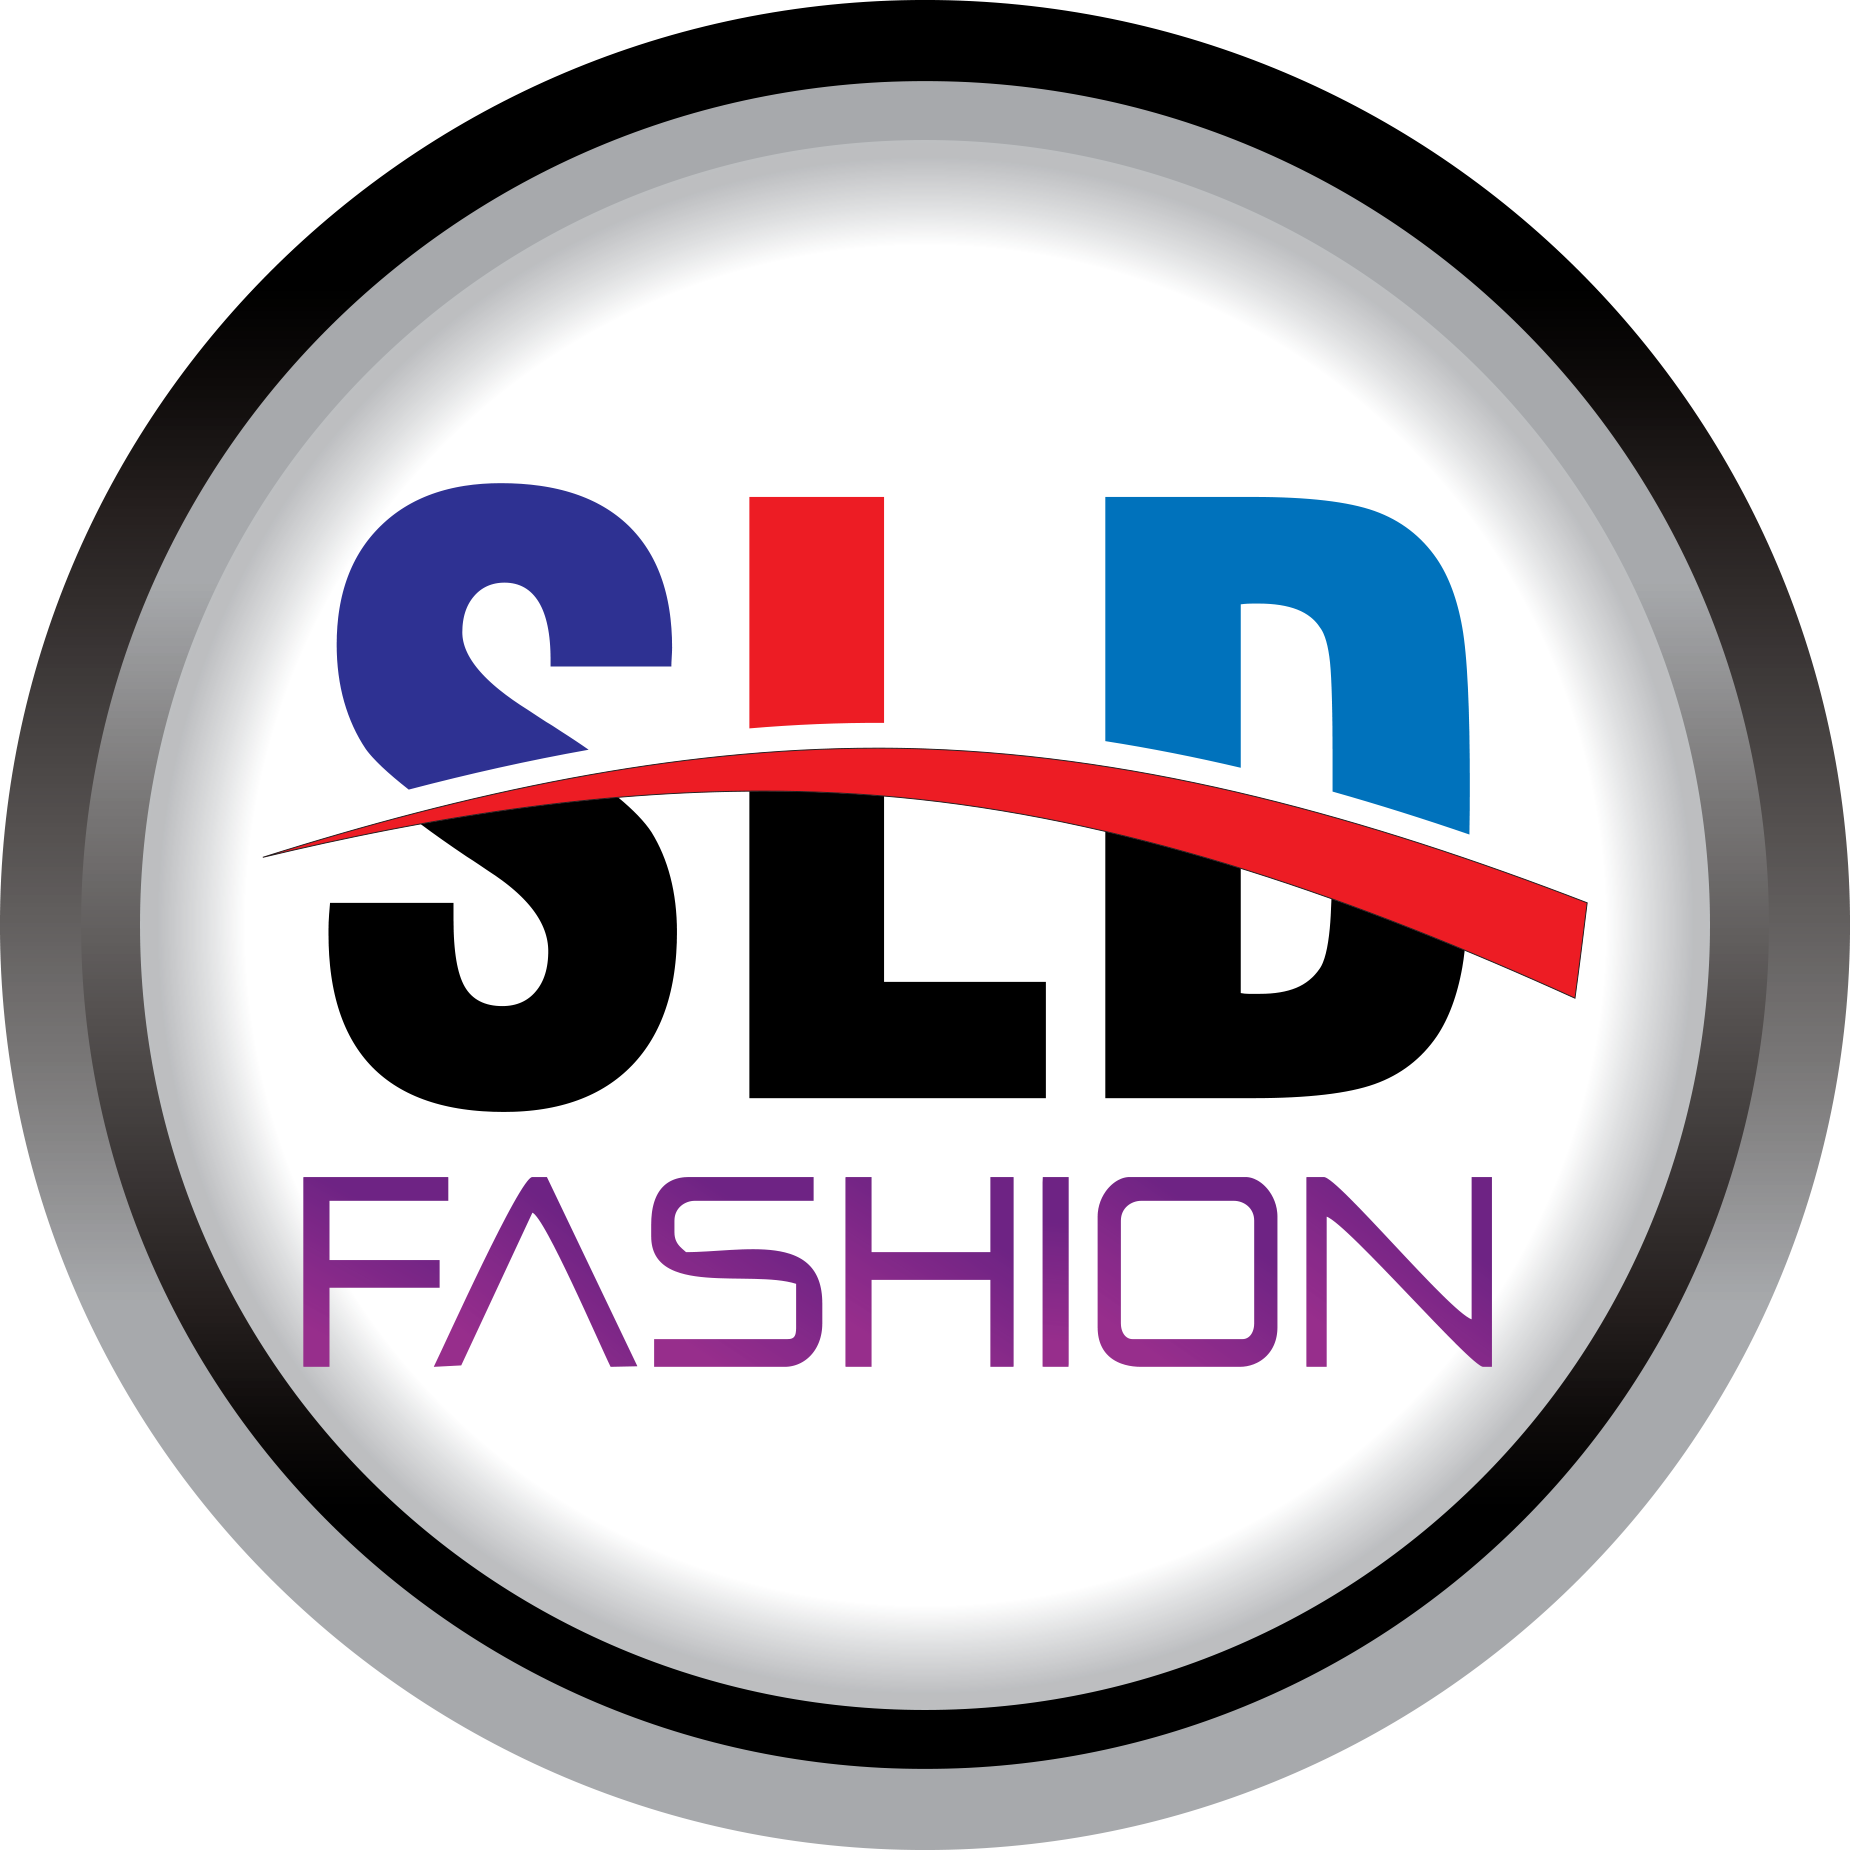 SLD Fashion